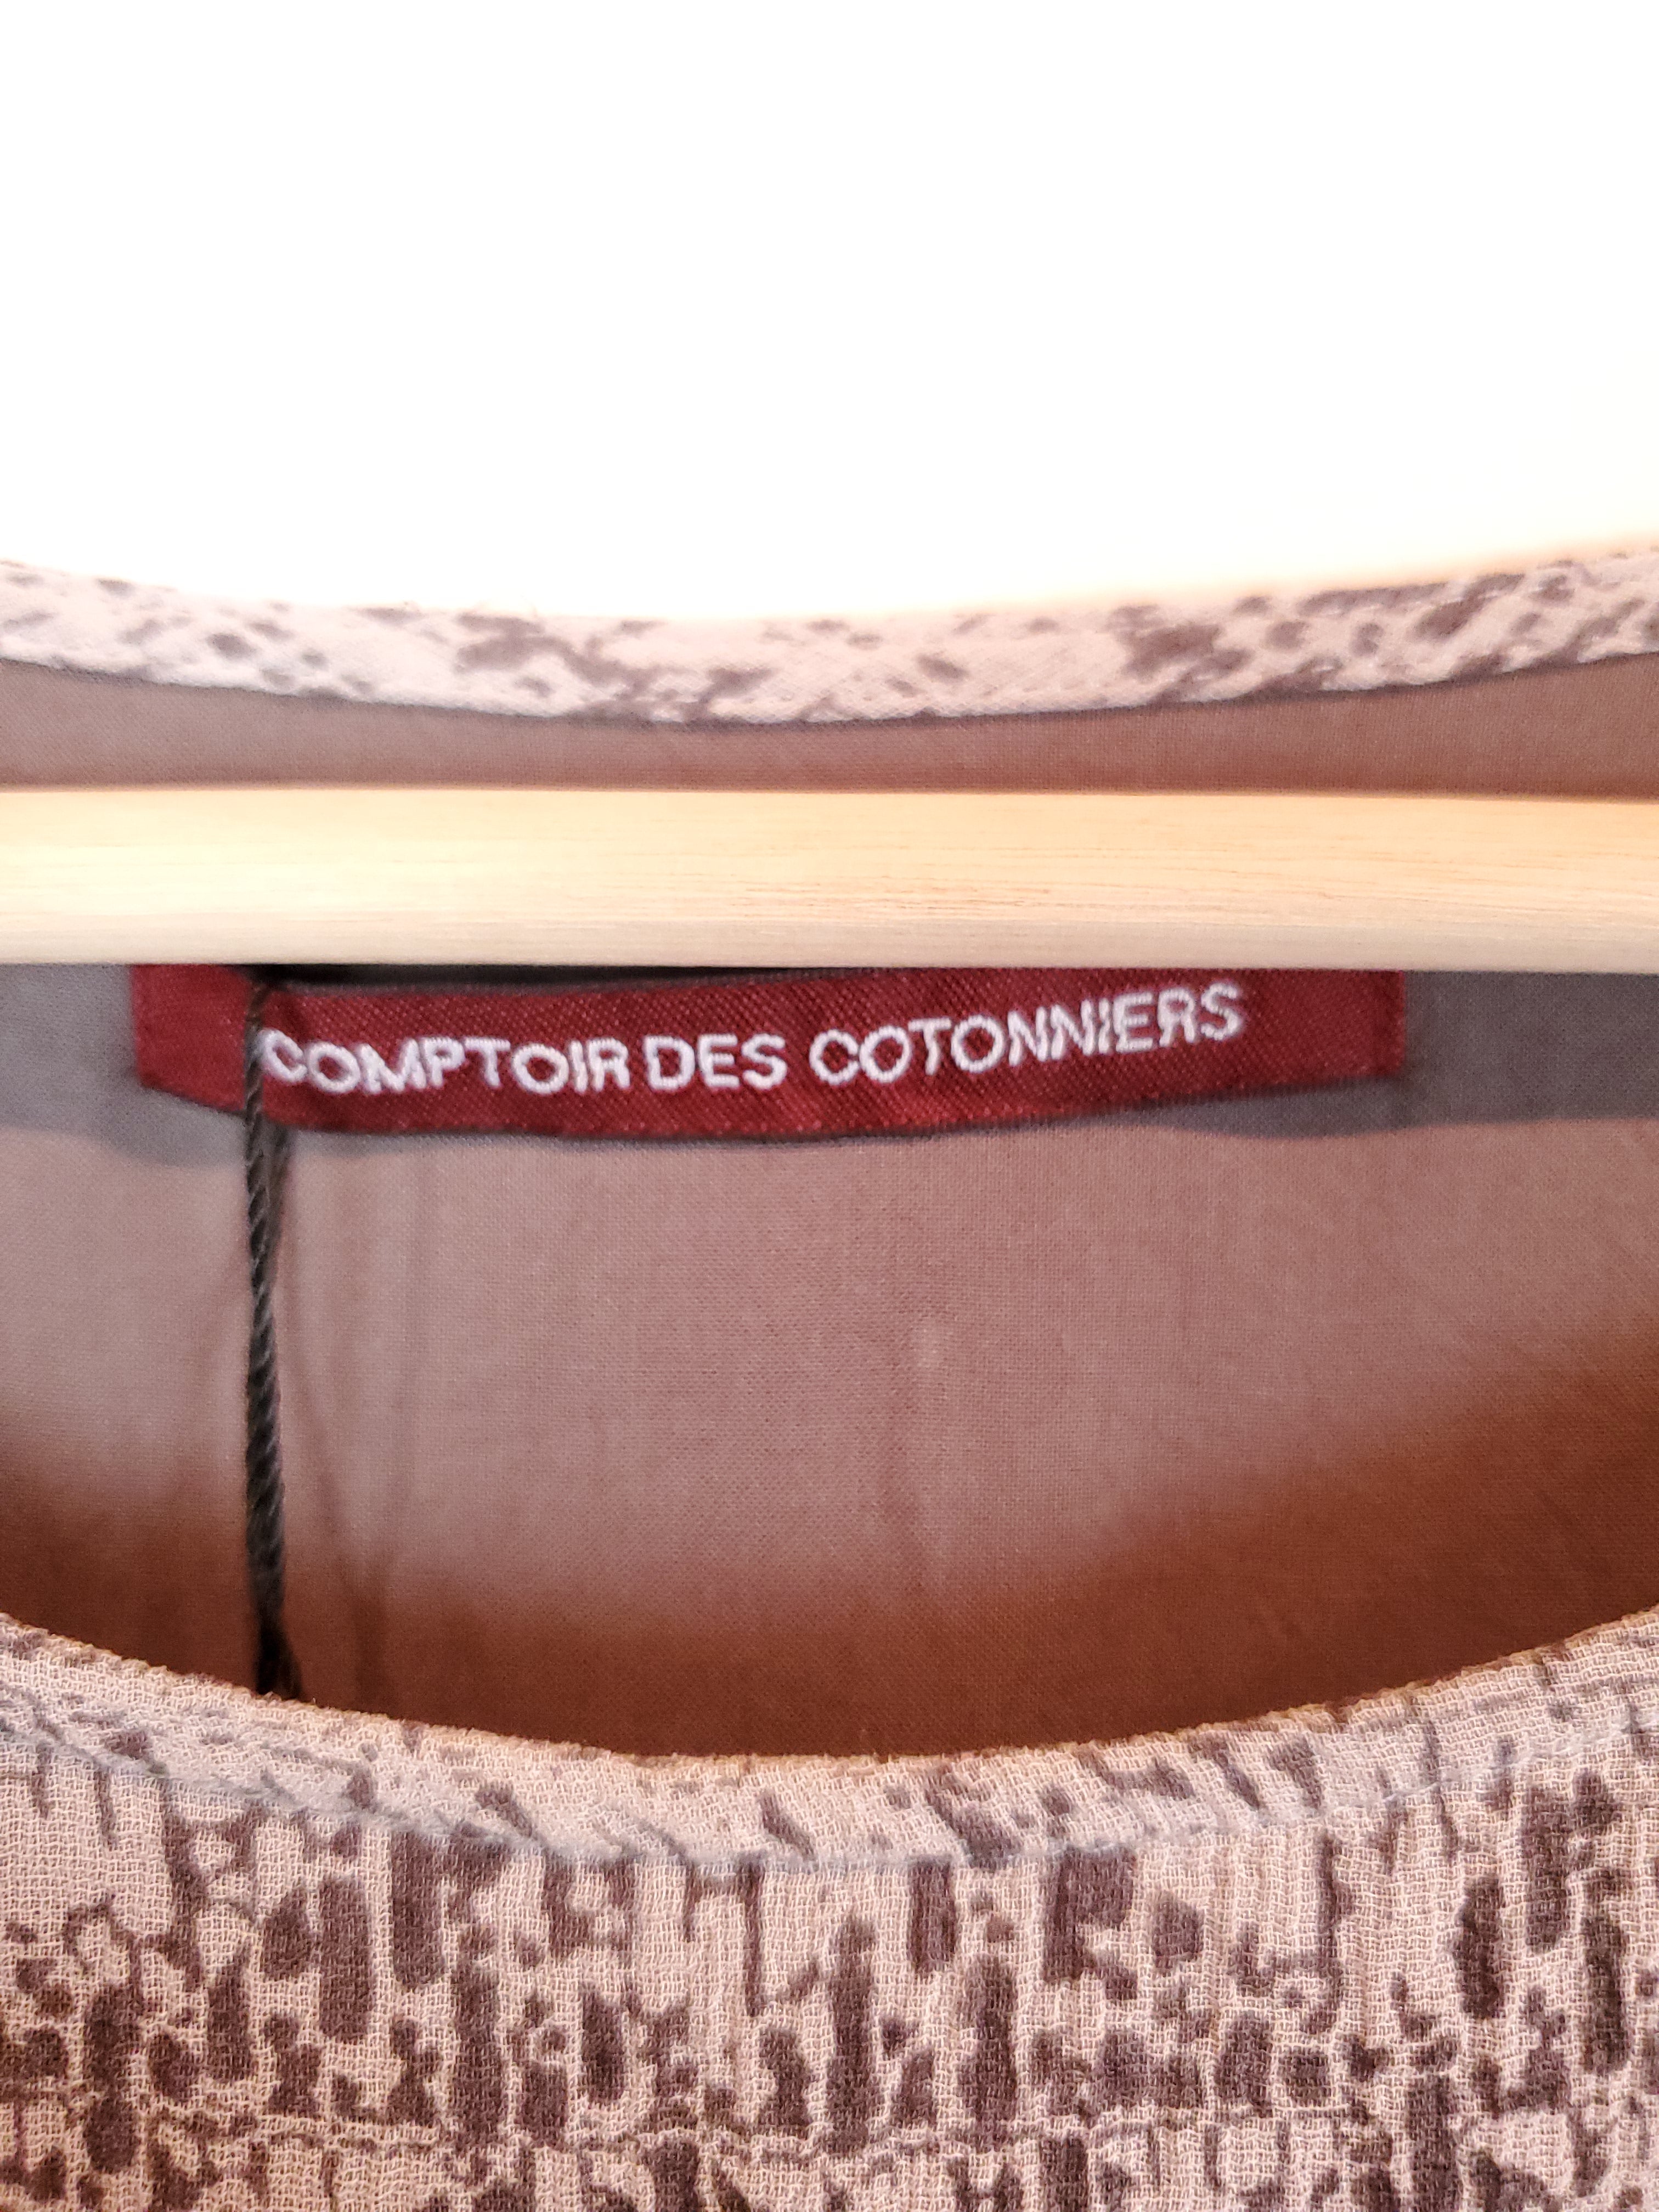 Robe Comptoir des Cotonniers